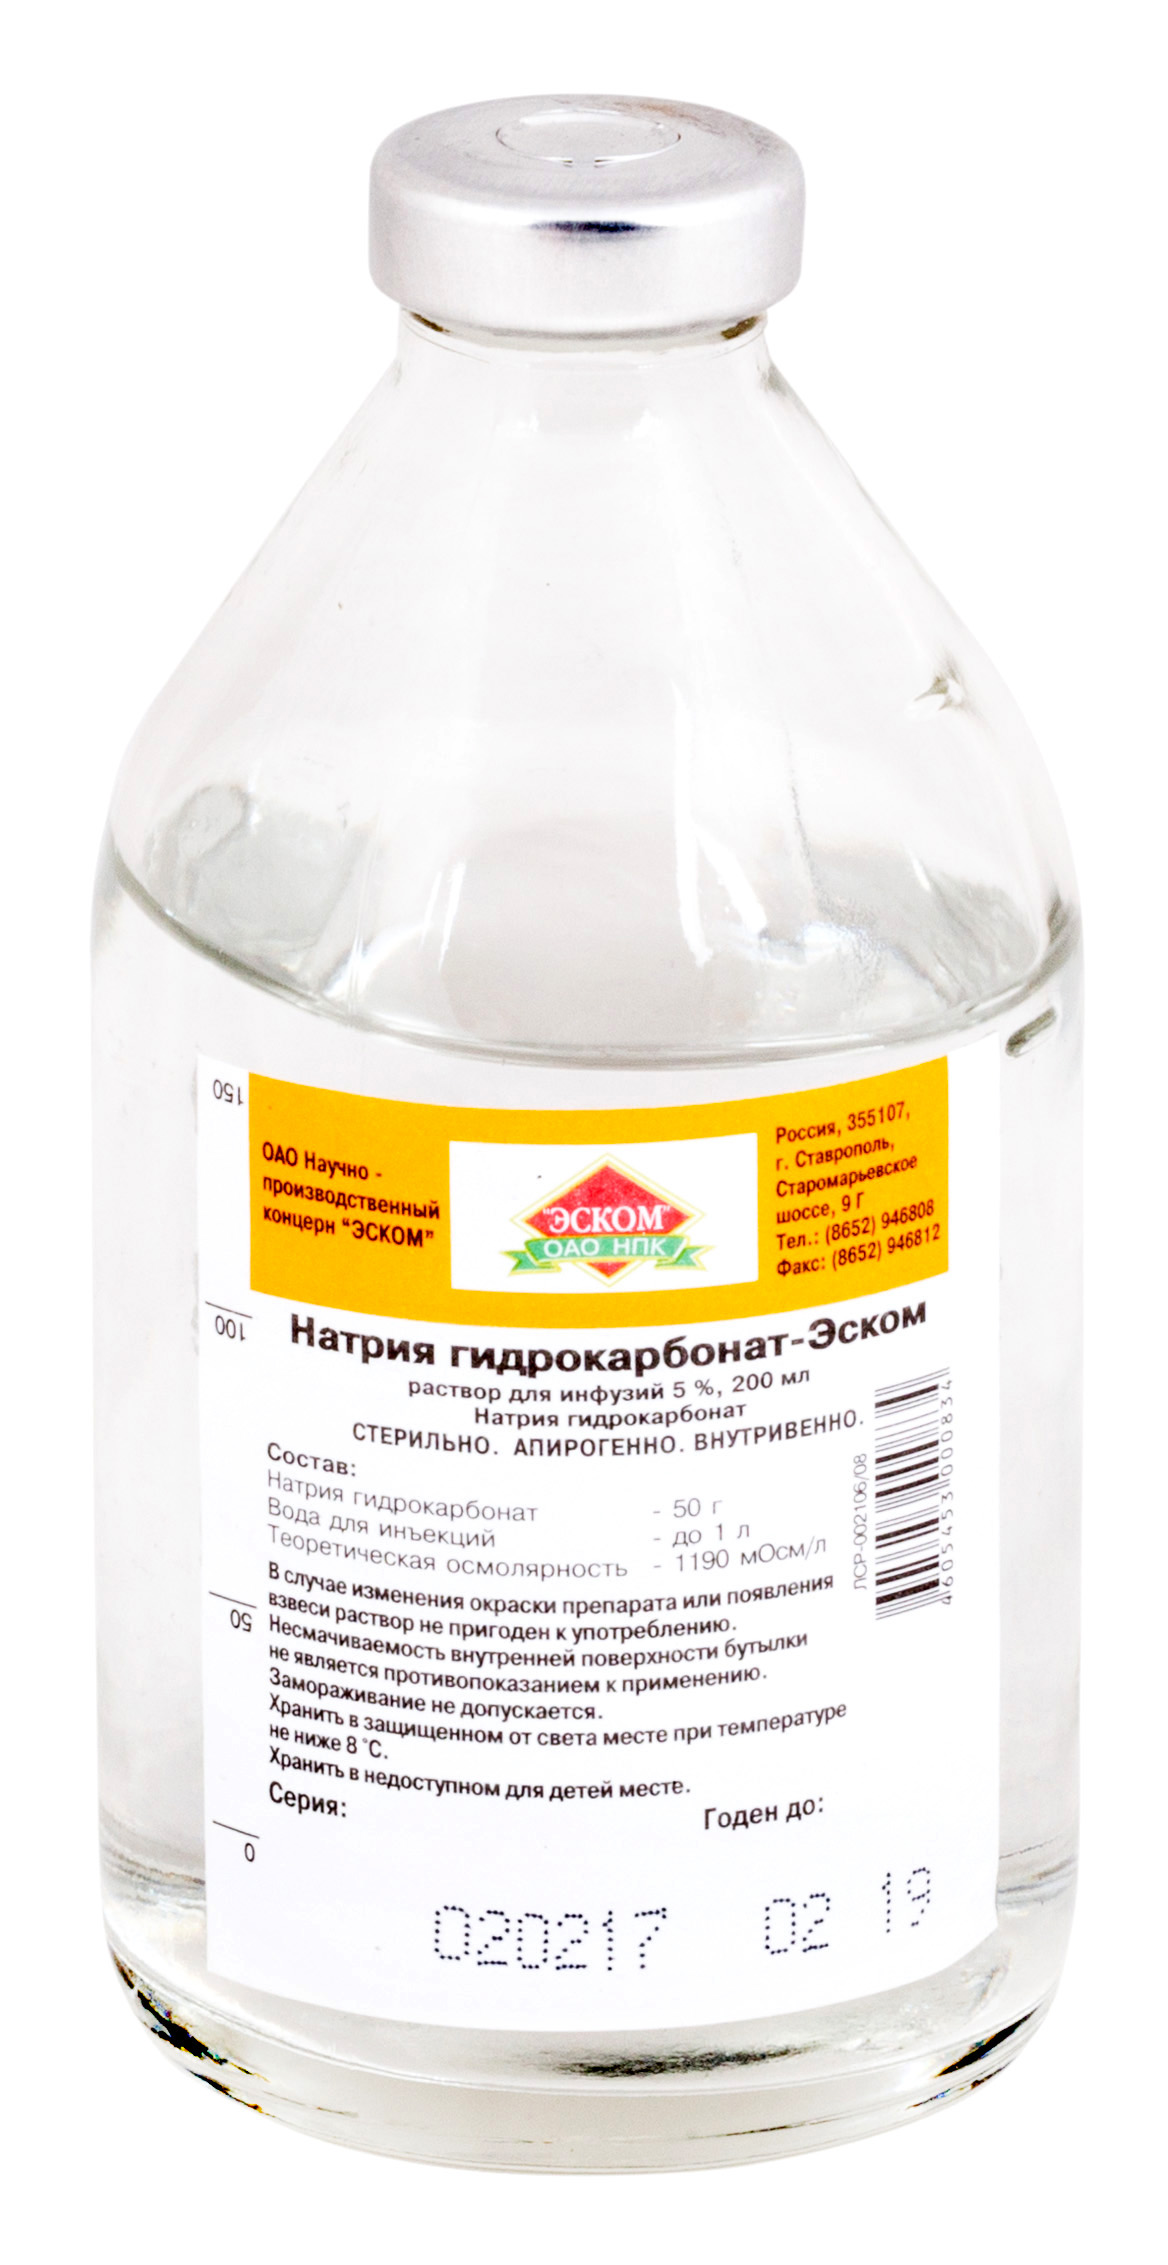 Aptekirls :: Натрия гидрокарбонат-эском р-р д/инф. 5% 200мл n1 .